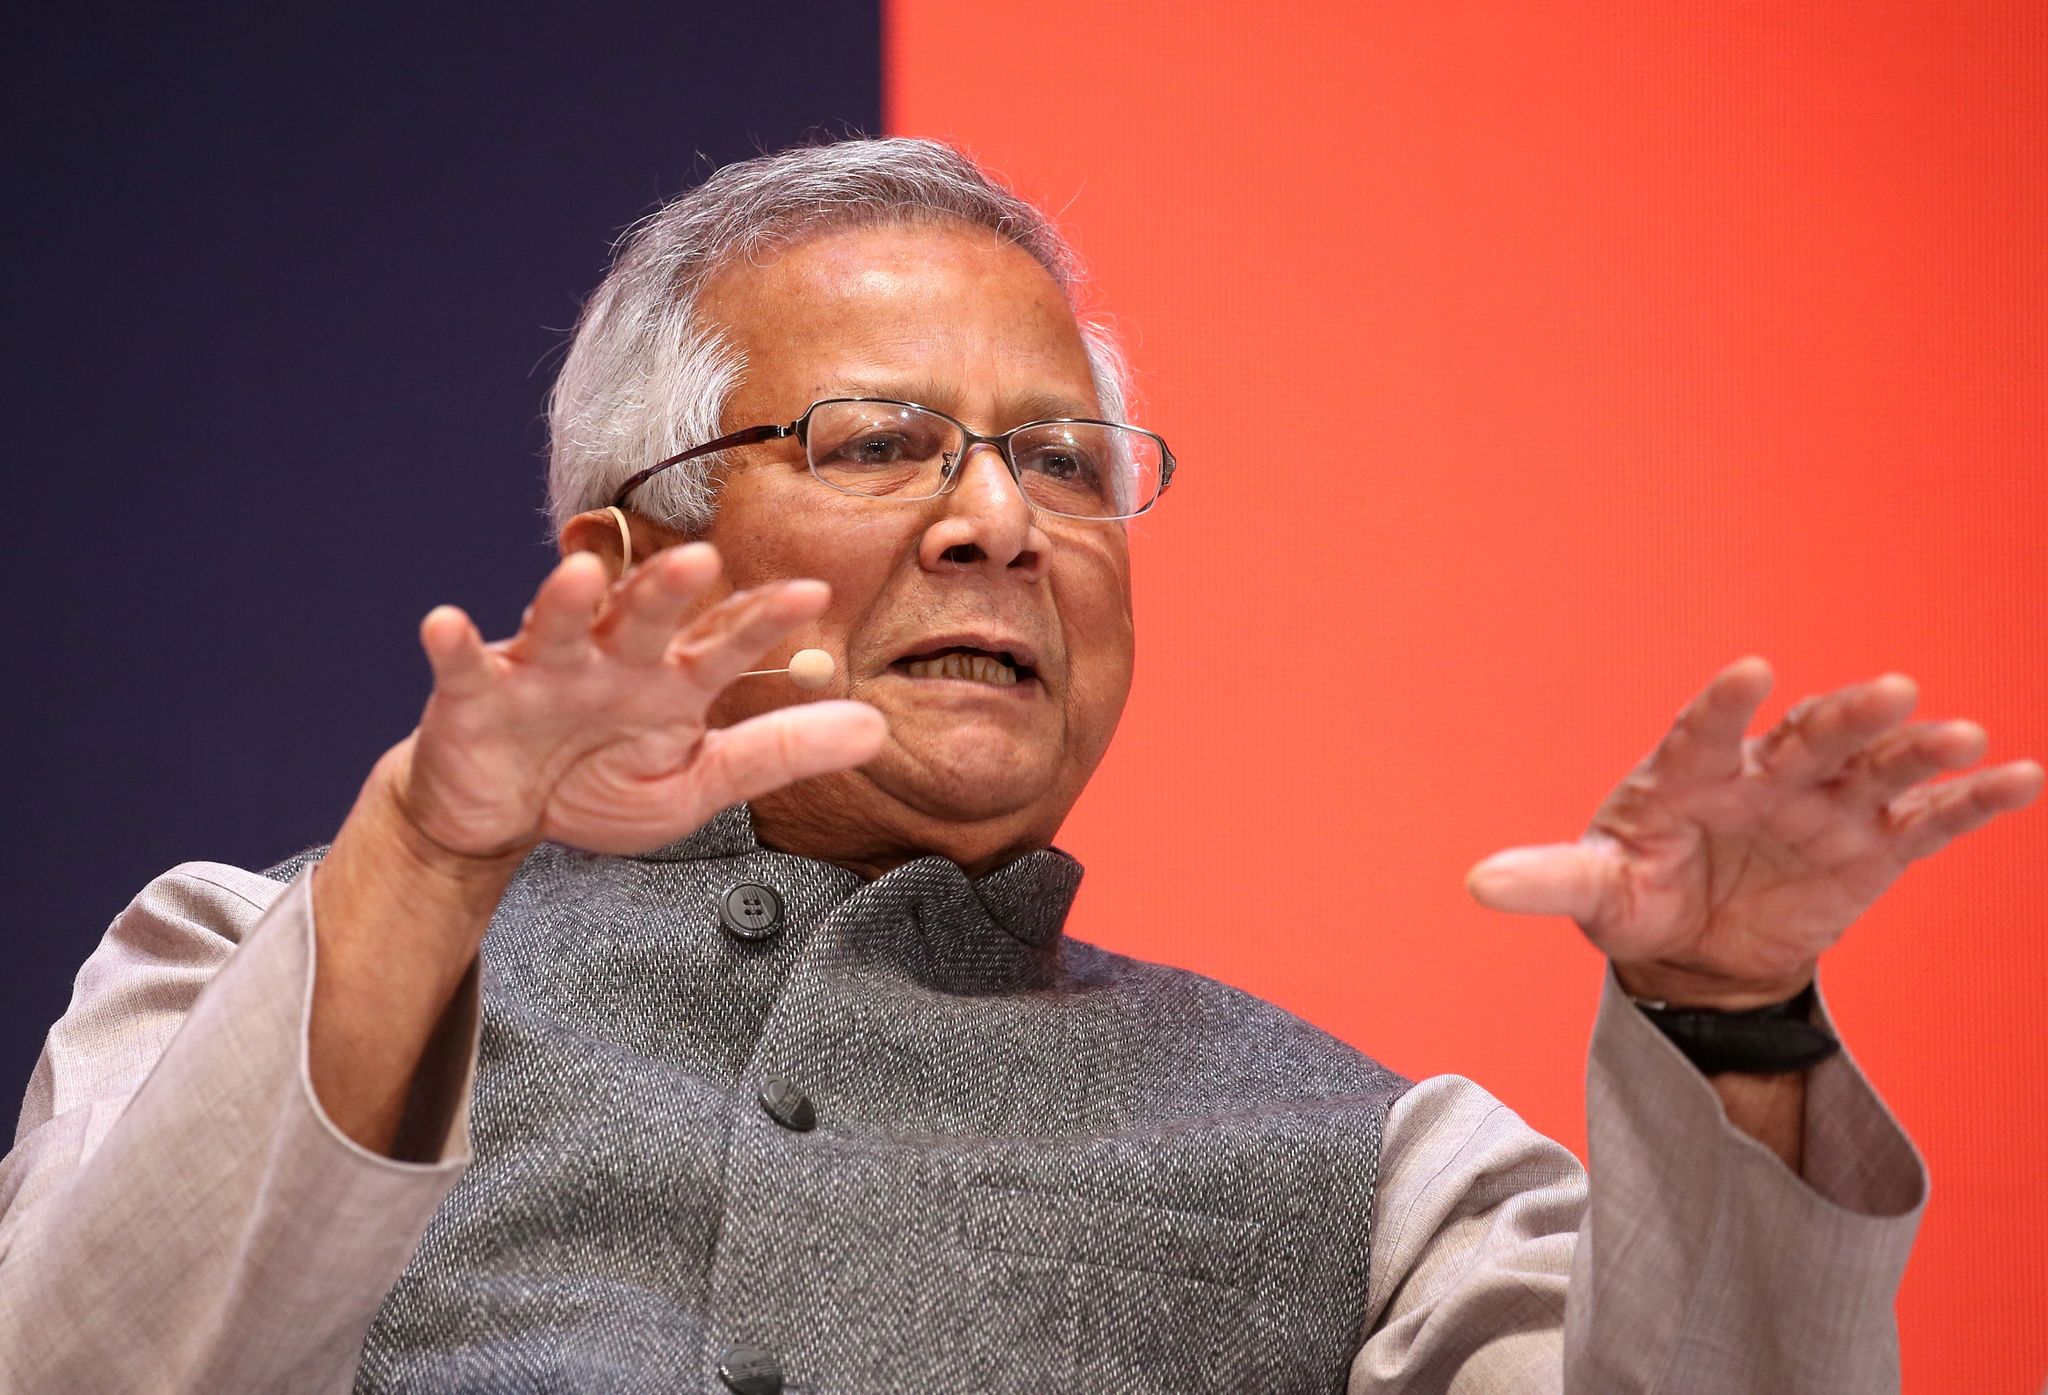 Friedensnobelpreisträger Muhammad Yunus im Januar 2020 in München. Foto: Karl-Josef Hildenbrand/dpa